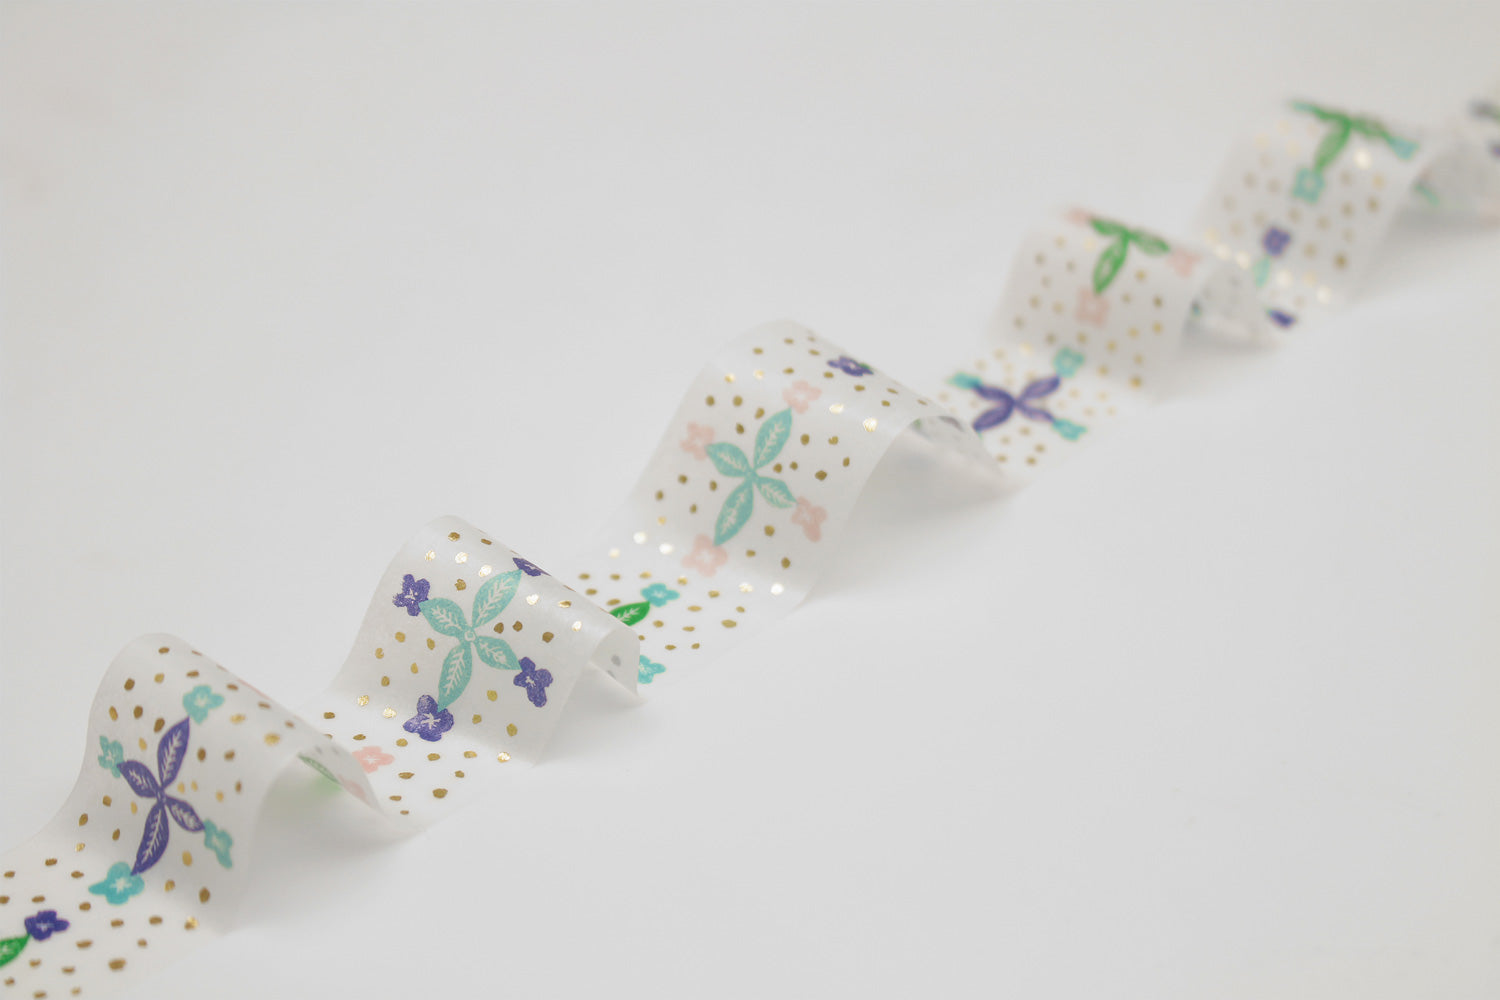 mt x Mina Perhonen Foil Stamping - Blooming Day - 24mm Washi Tape